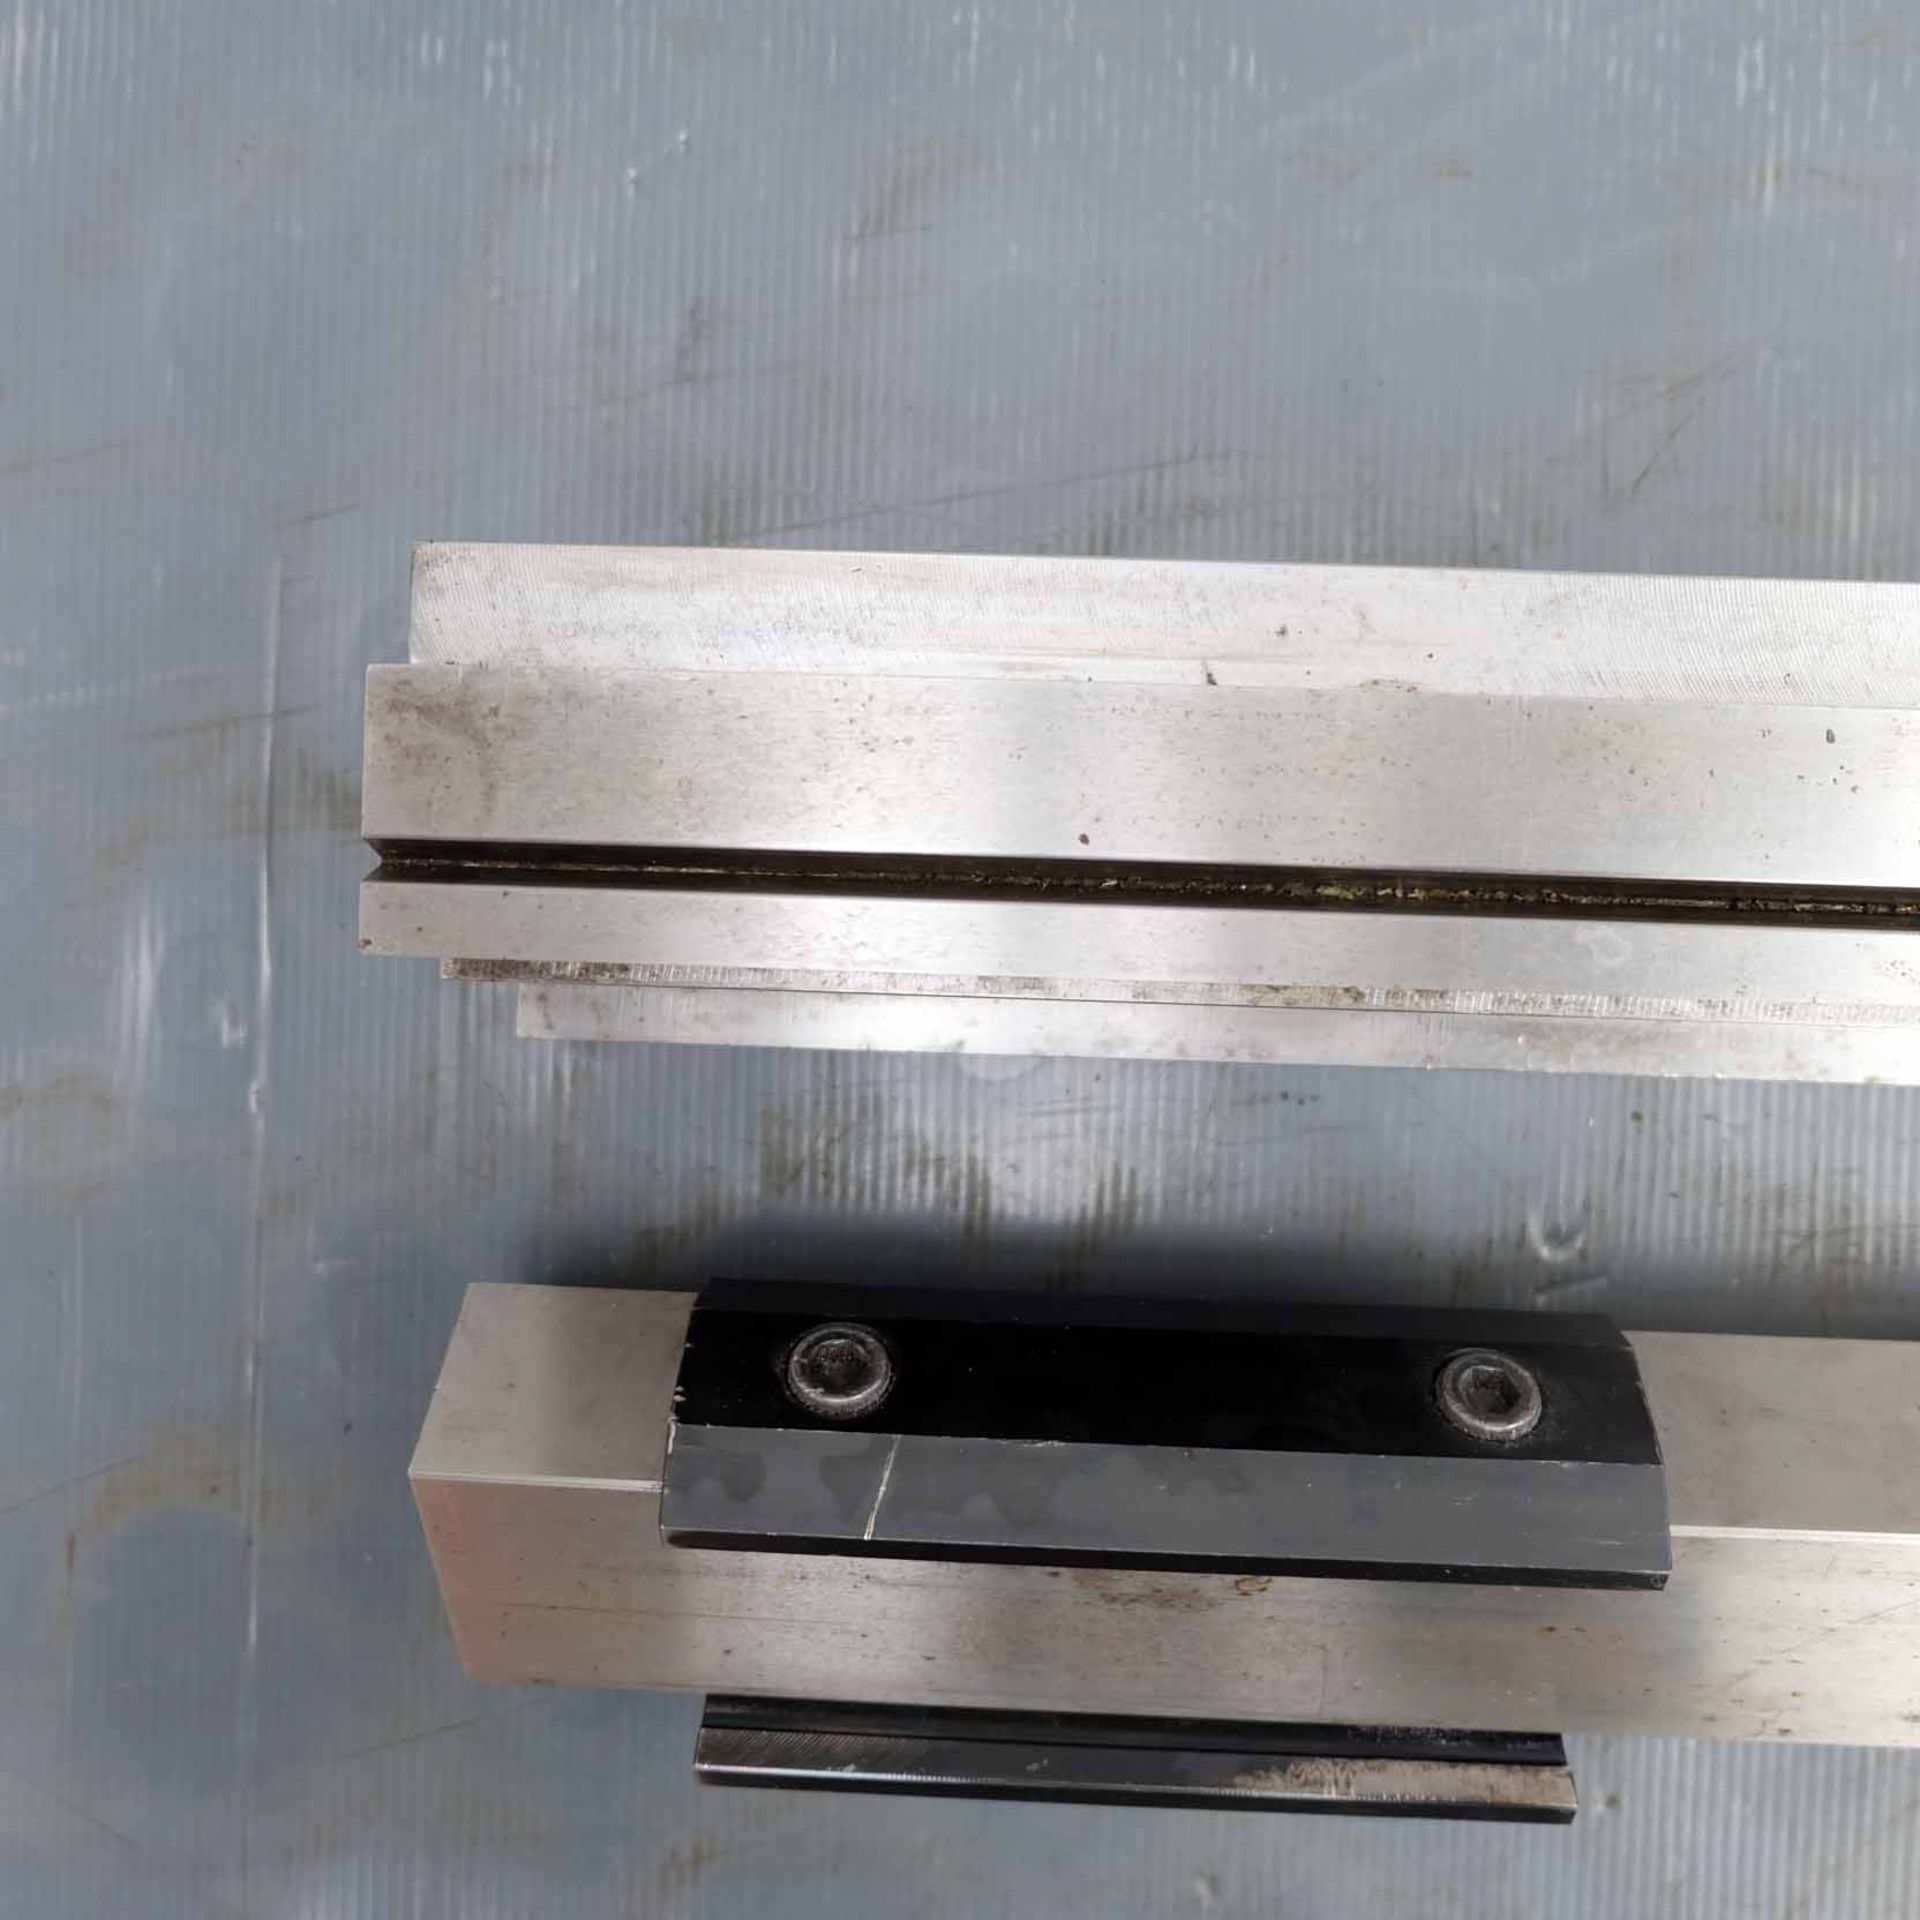 Spring Loaded Hemming Type Bottom Press Brake Tool. 1 x 835mm Long x 100mm High. 60mm Wide Base. 40m - Image 5 of 7